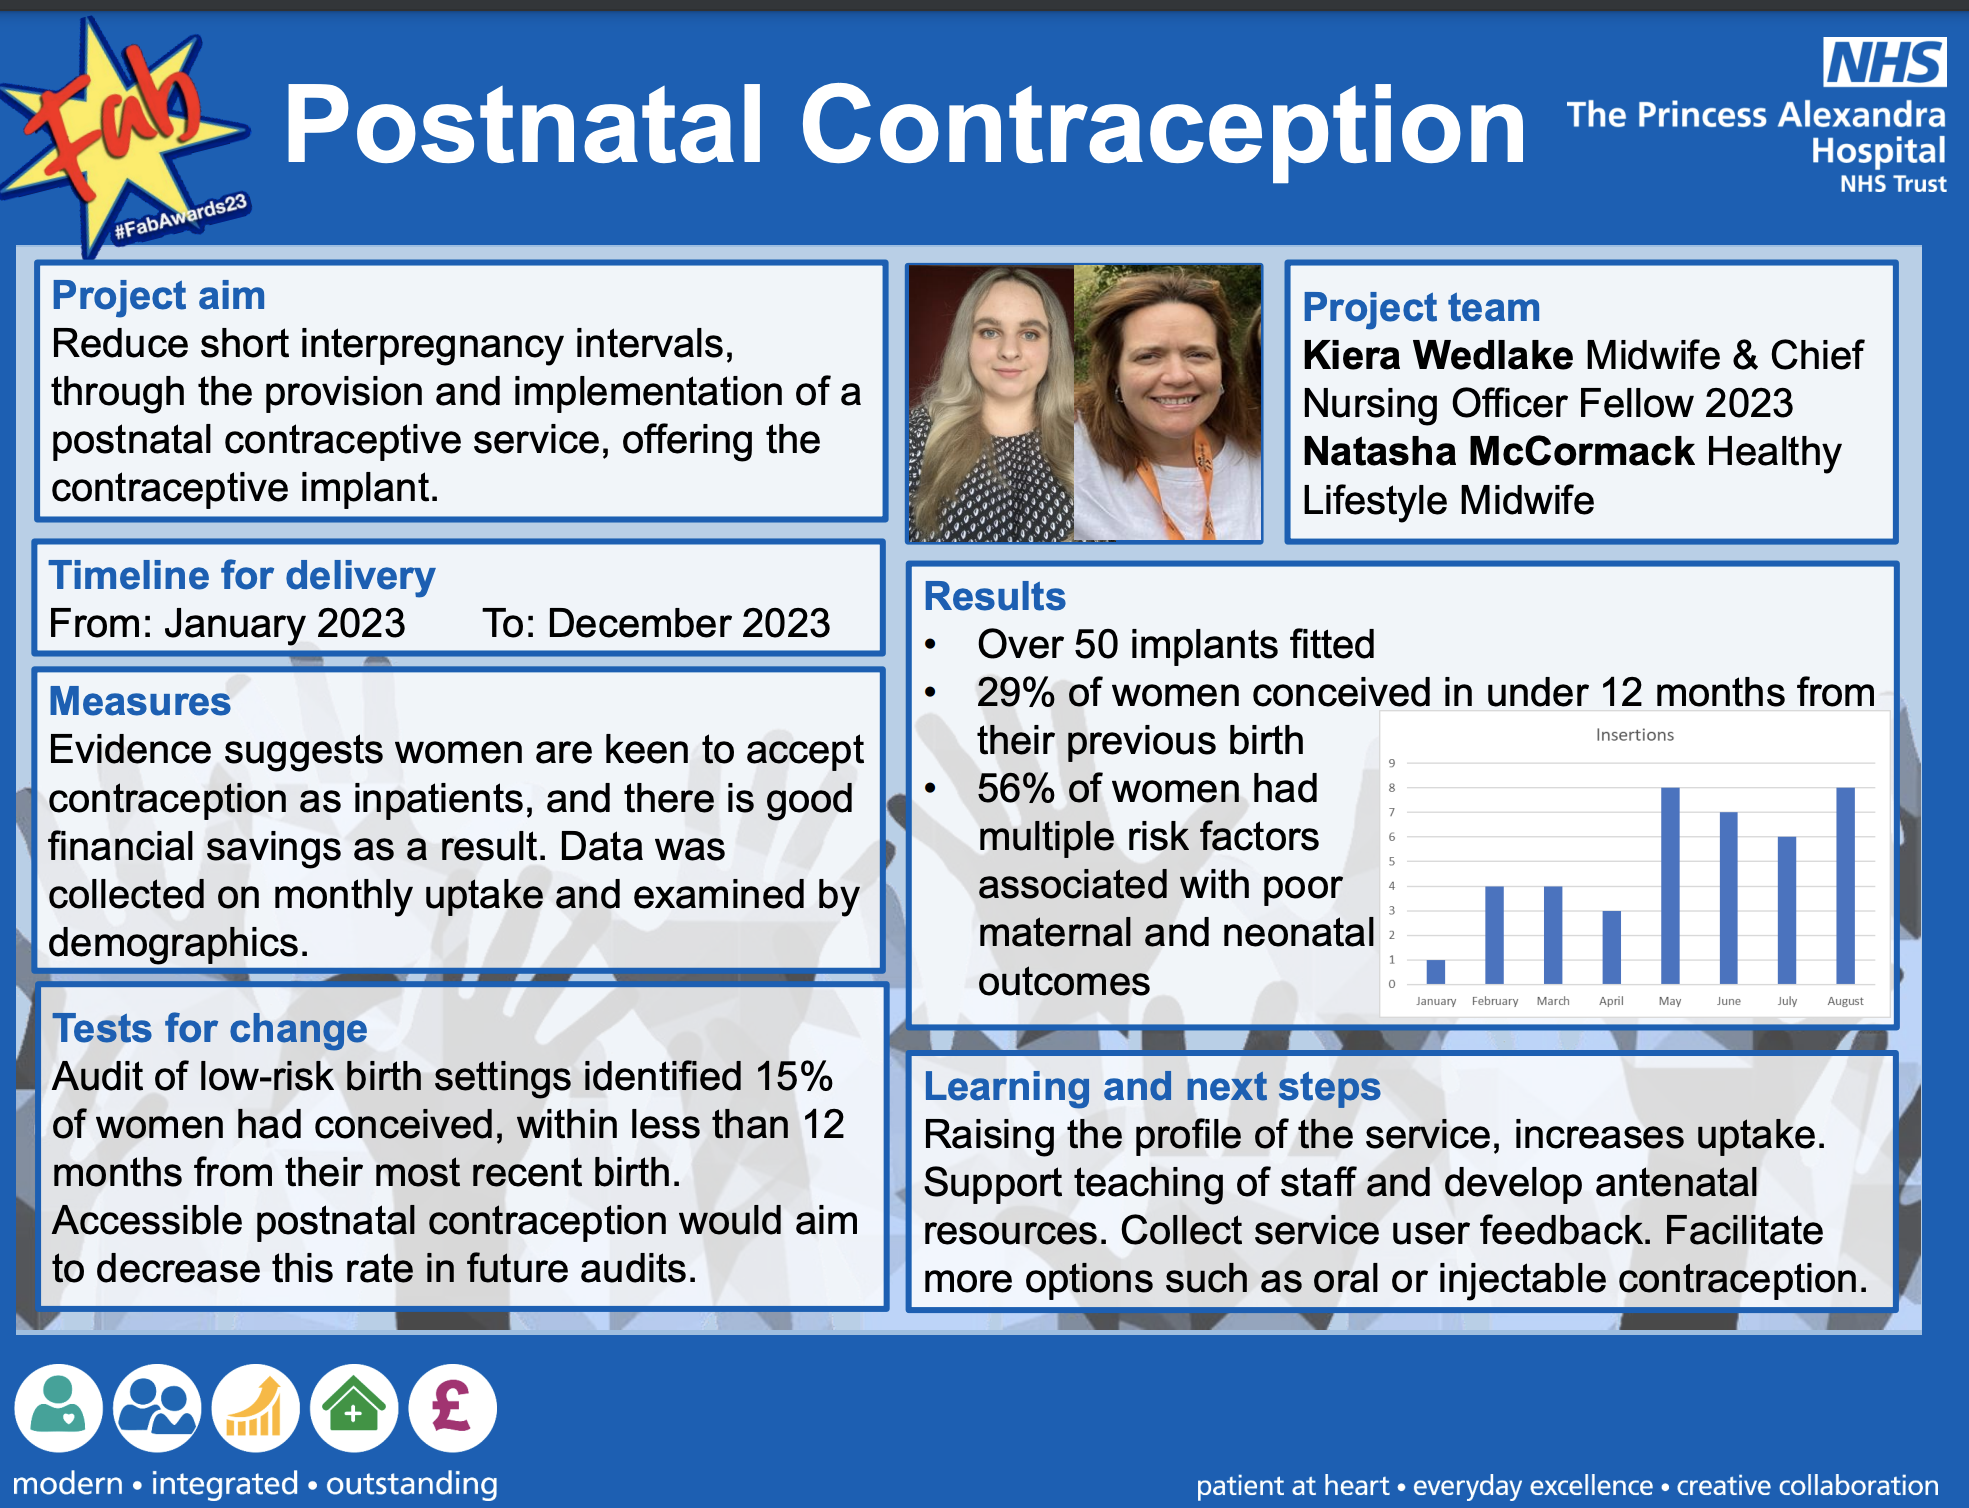 Postnatal Contraception featured image